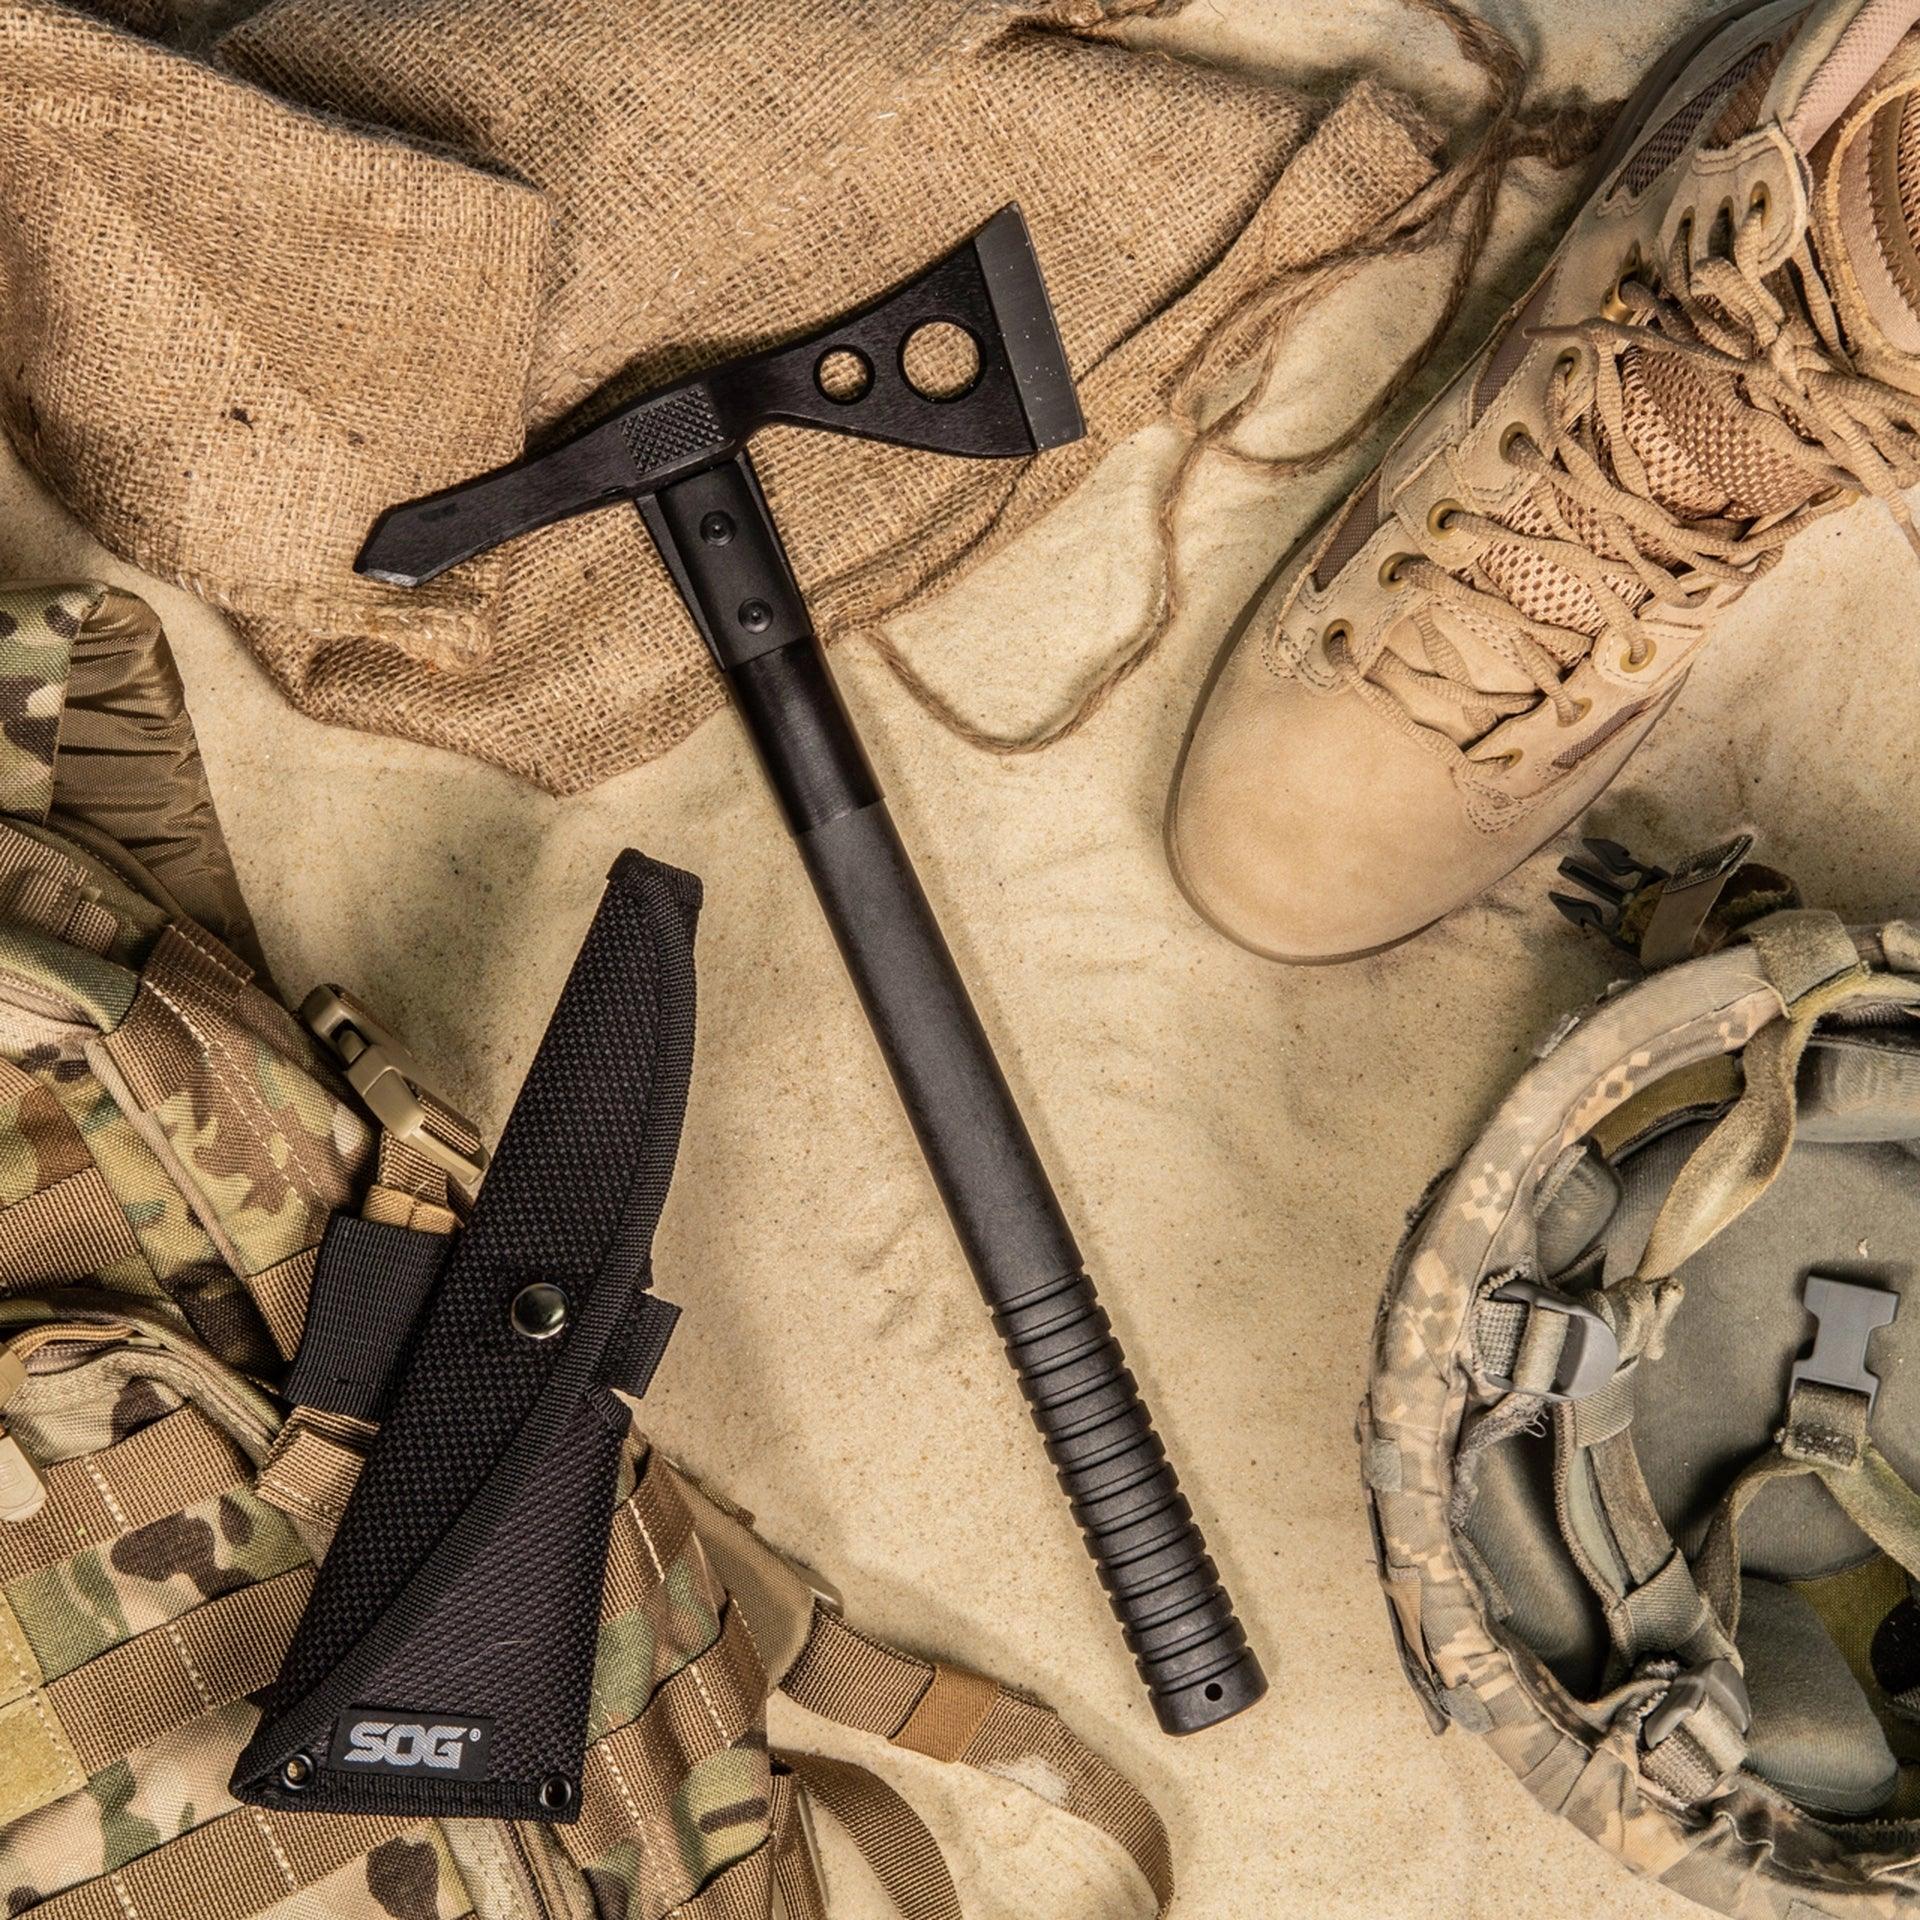 SOG Tactical Tomahawk Black GRN Handle - Knives.mx